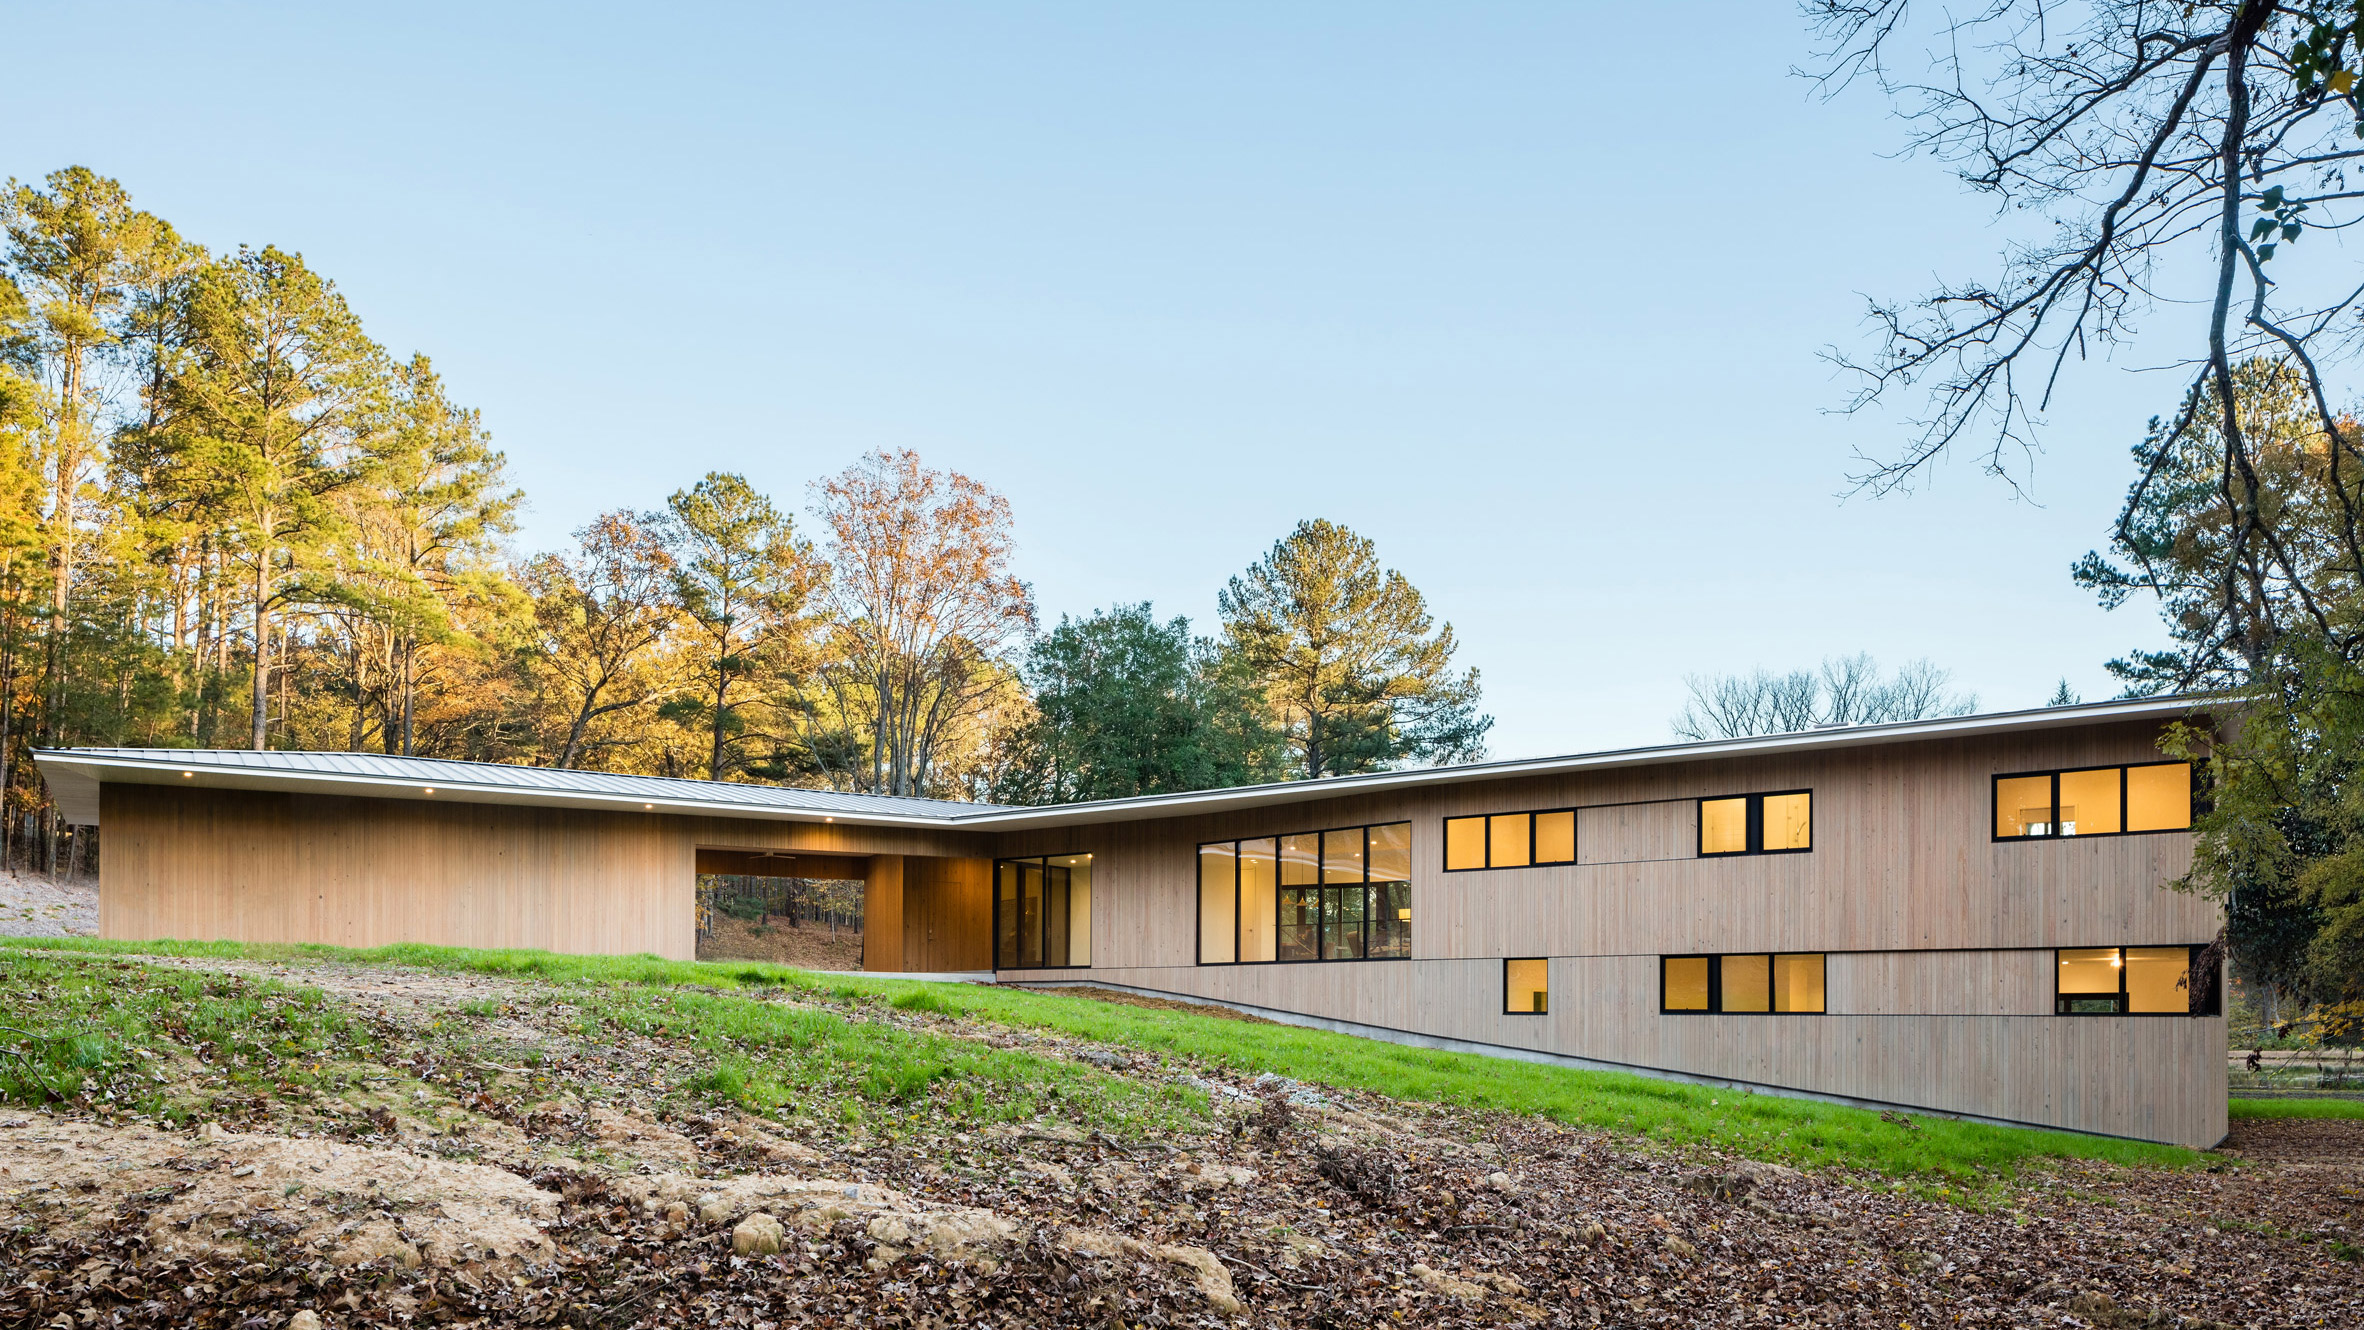 Smitharc Architects situates Blue Dog Residence on wooded property in North Carolina